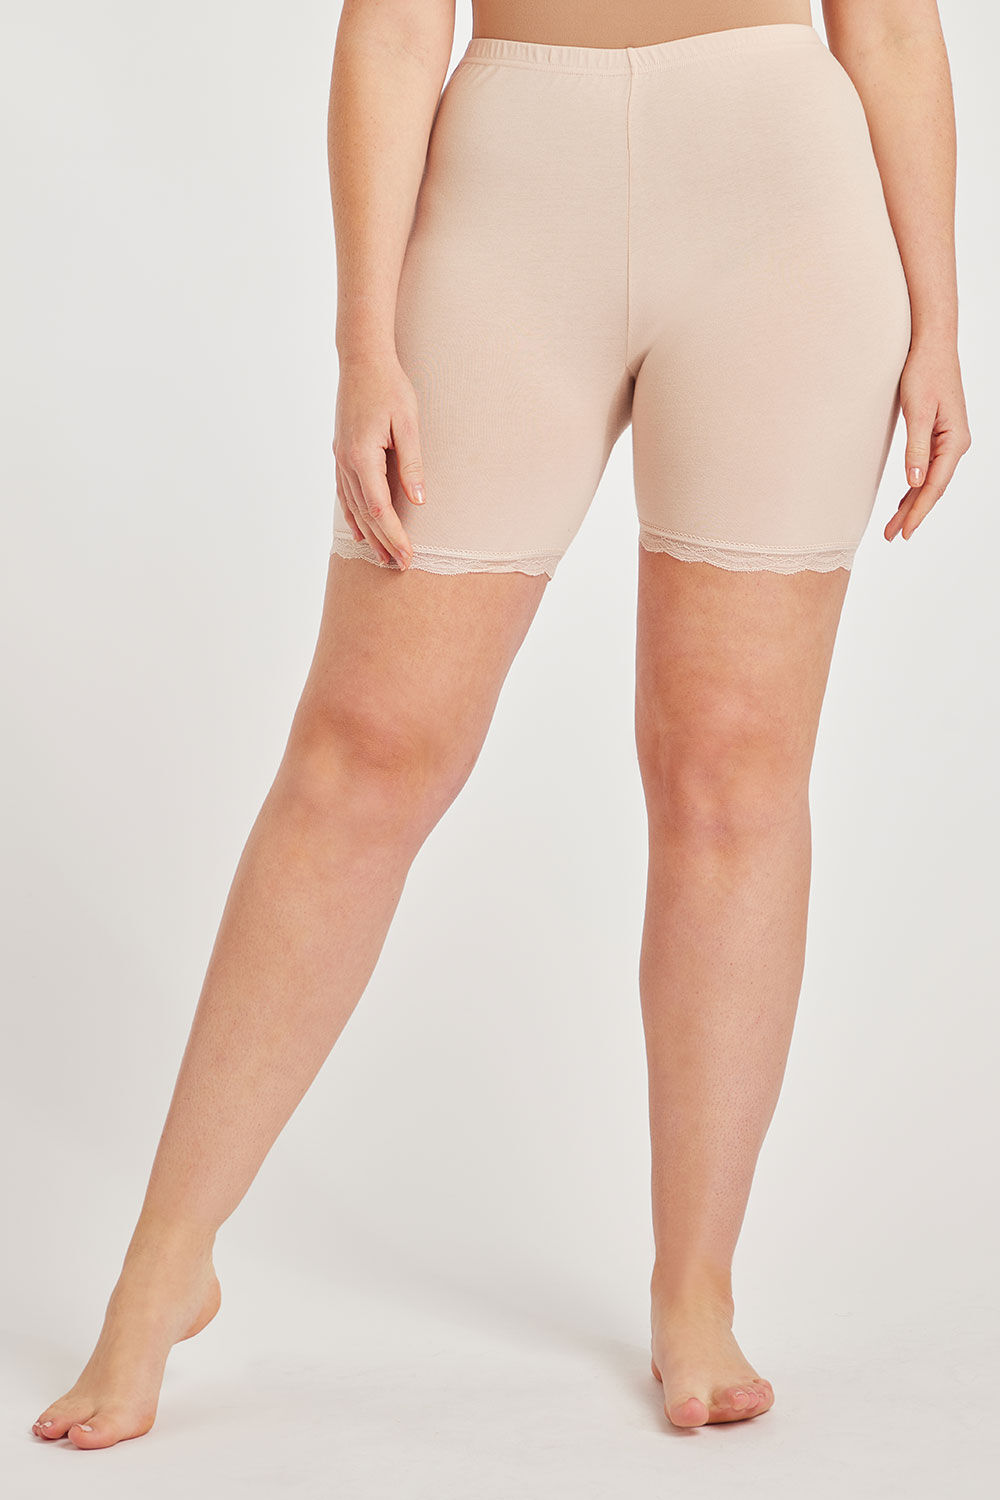 Bonmarche Beige Anti-Chafing Shorts, Size: 20-22